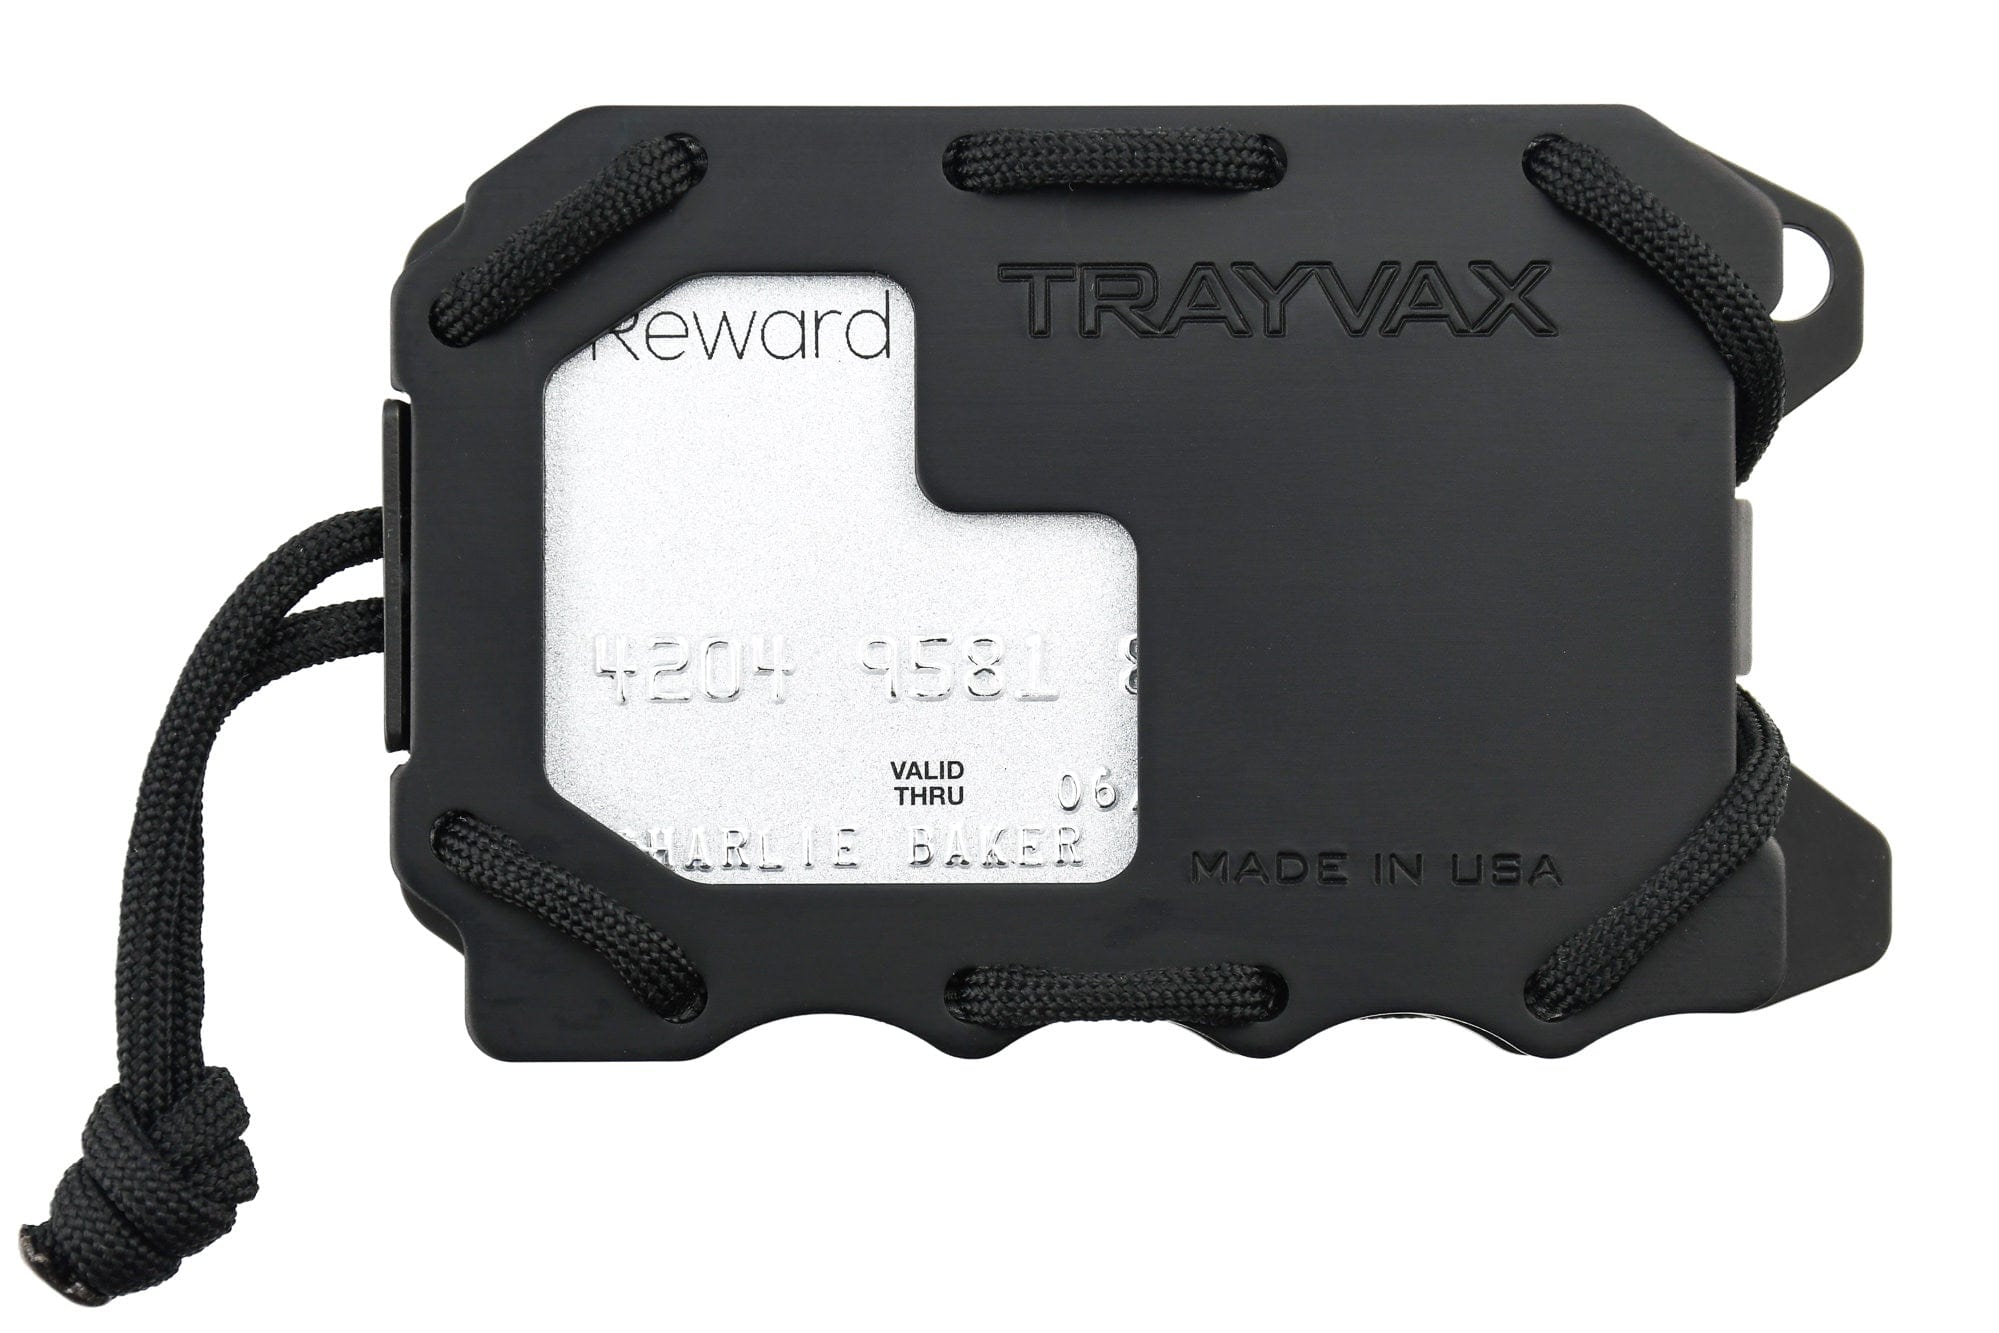 Trayvax Enterprises Wallet Black - Seconds Seconds | Original 2.0 Wallet